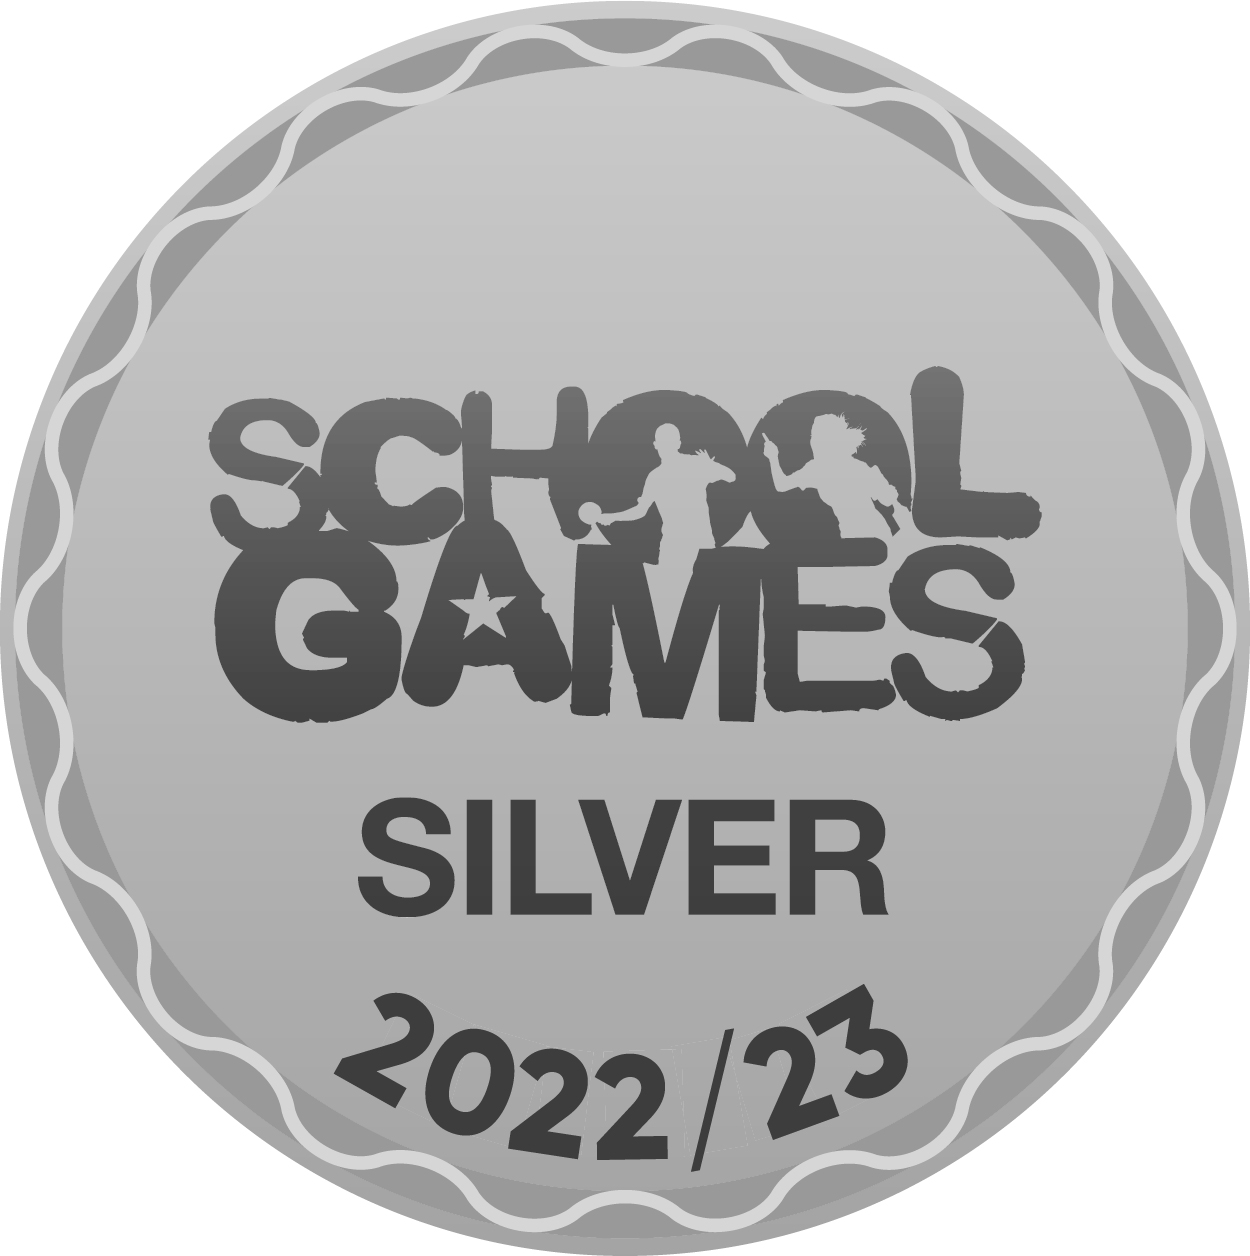 School Games Award 2022/23